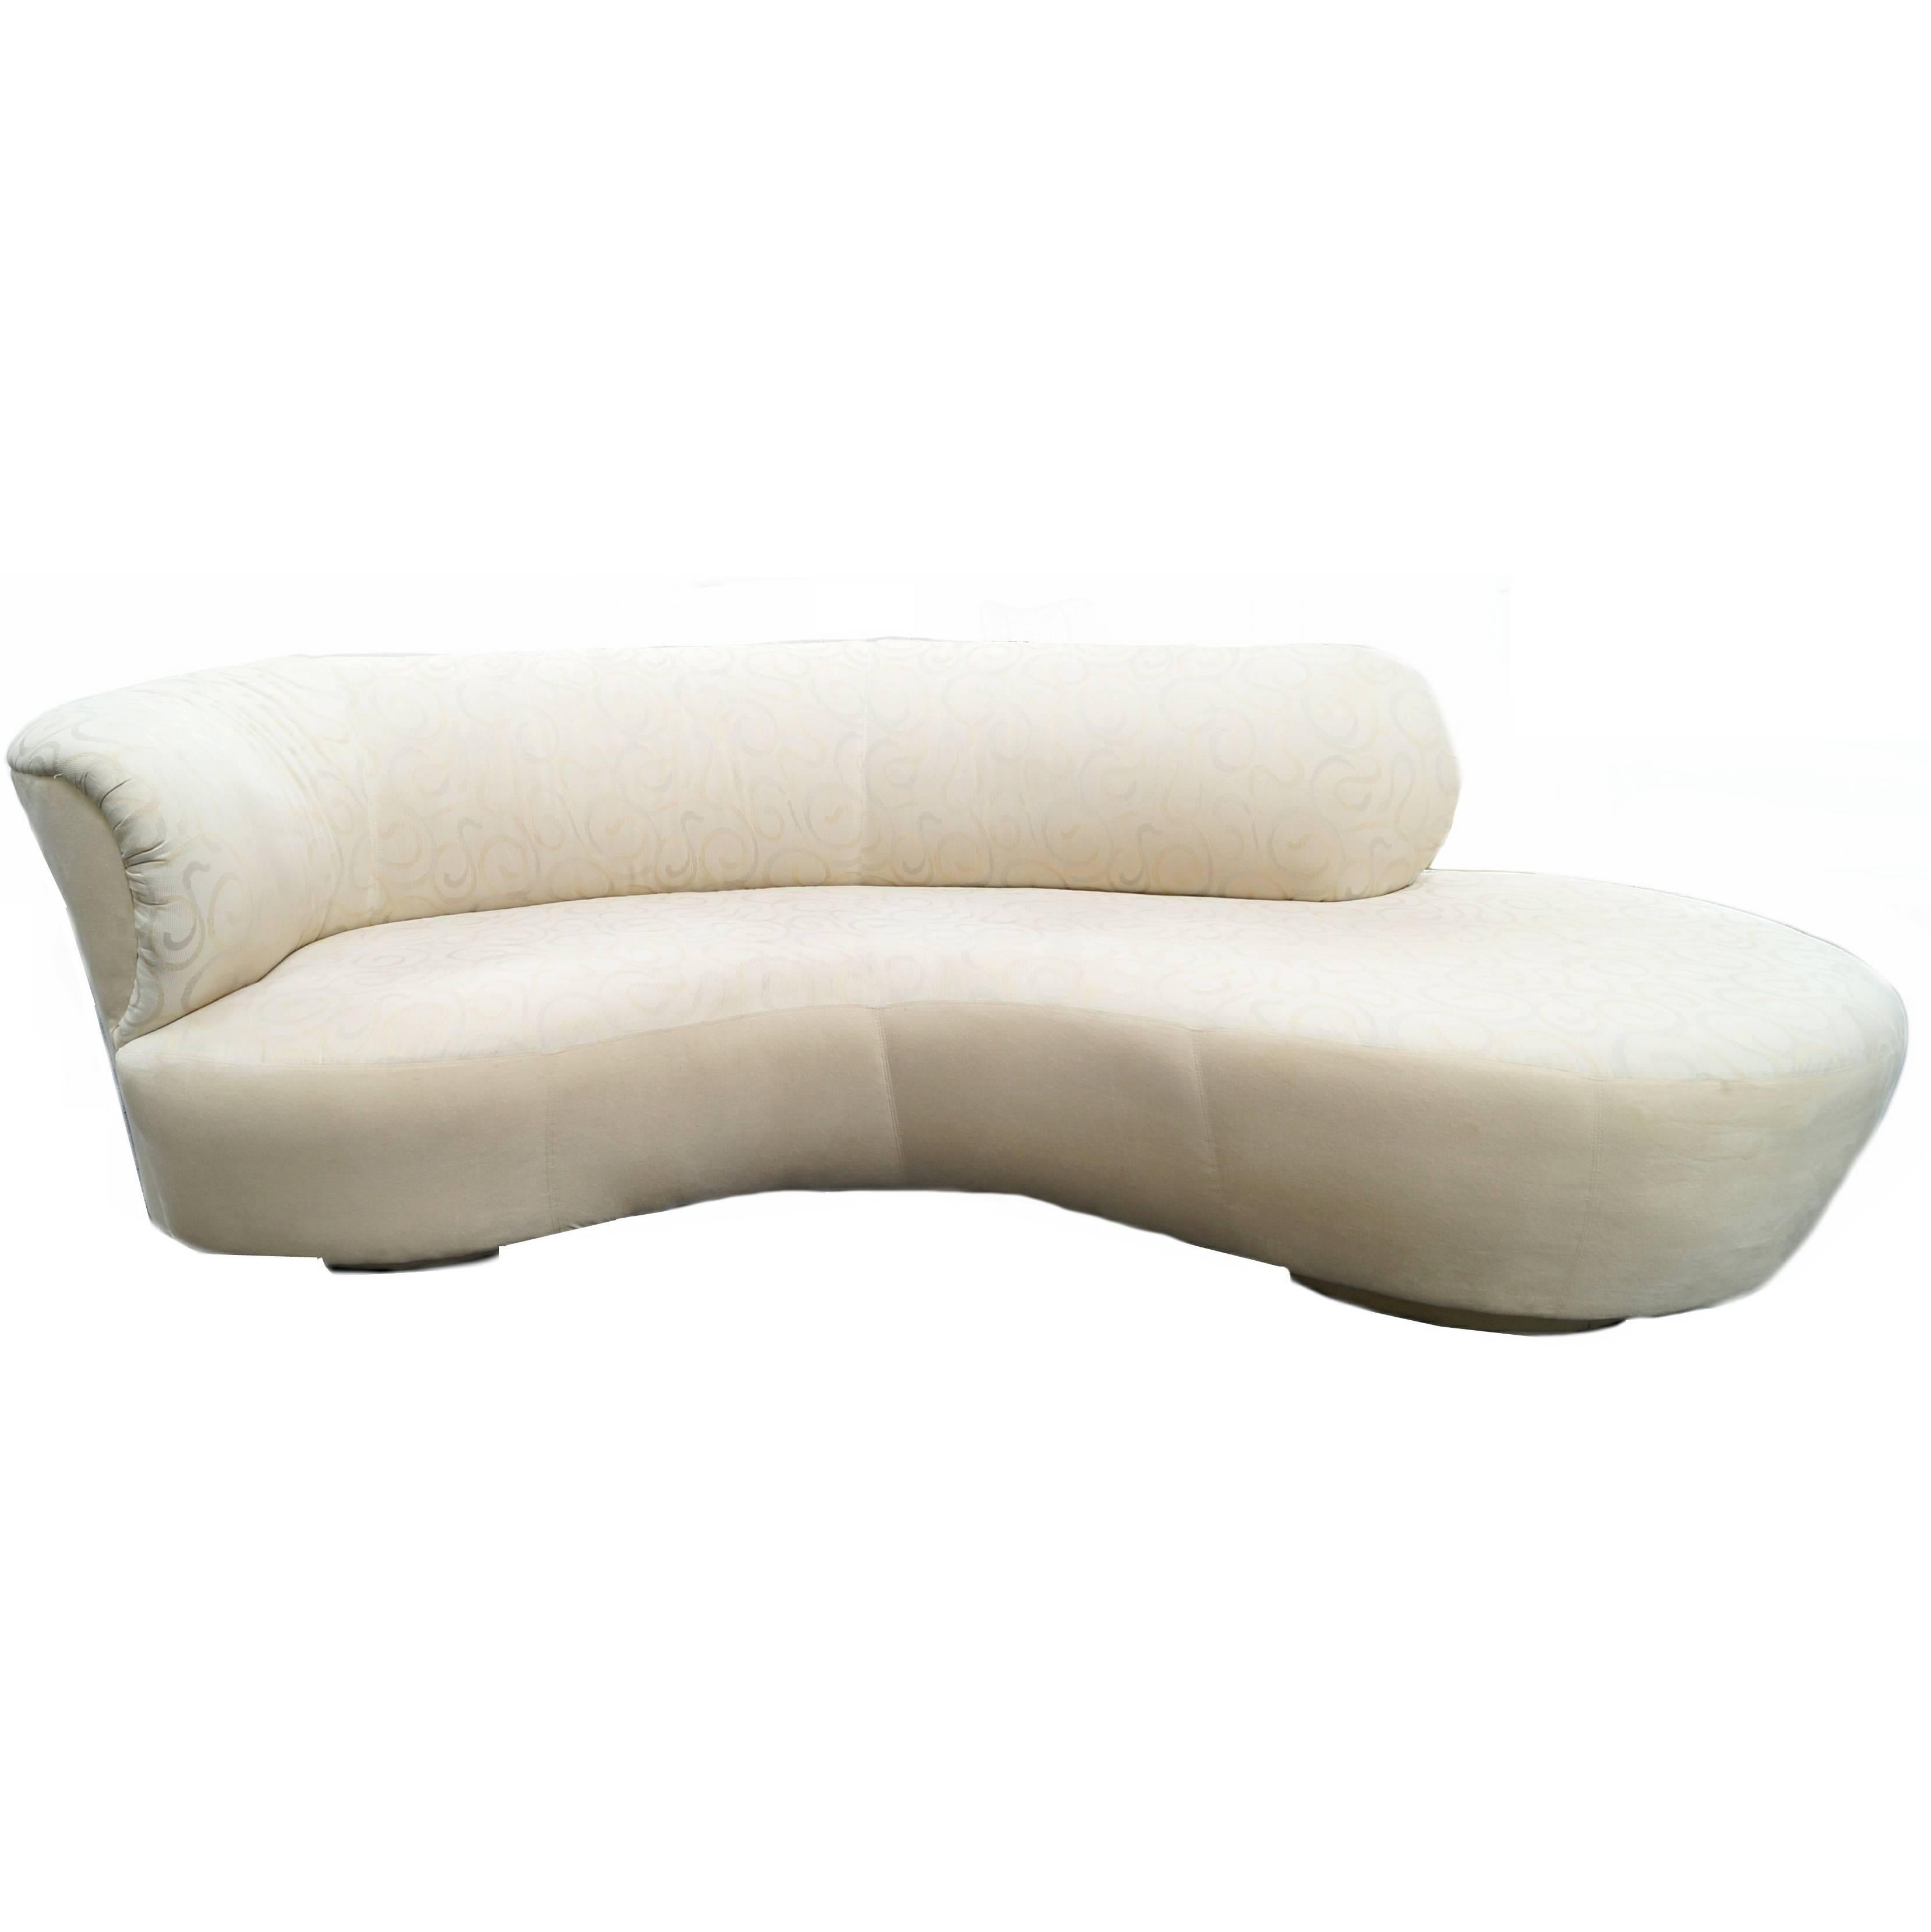 Vladimir Kagan style serpentine cloud sofa.